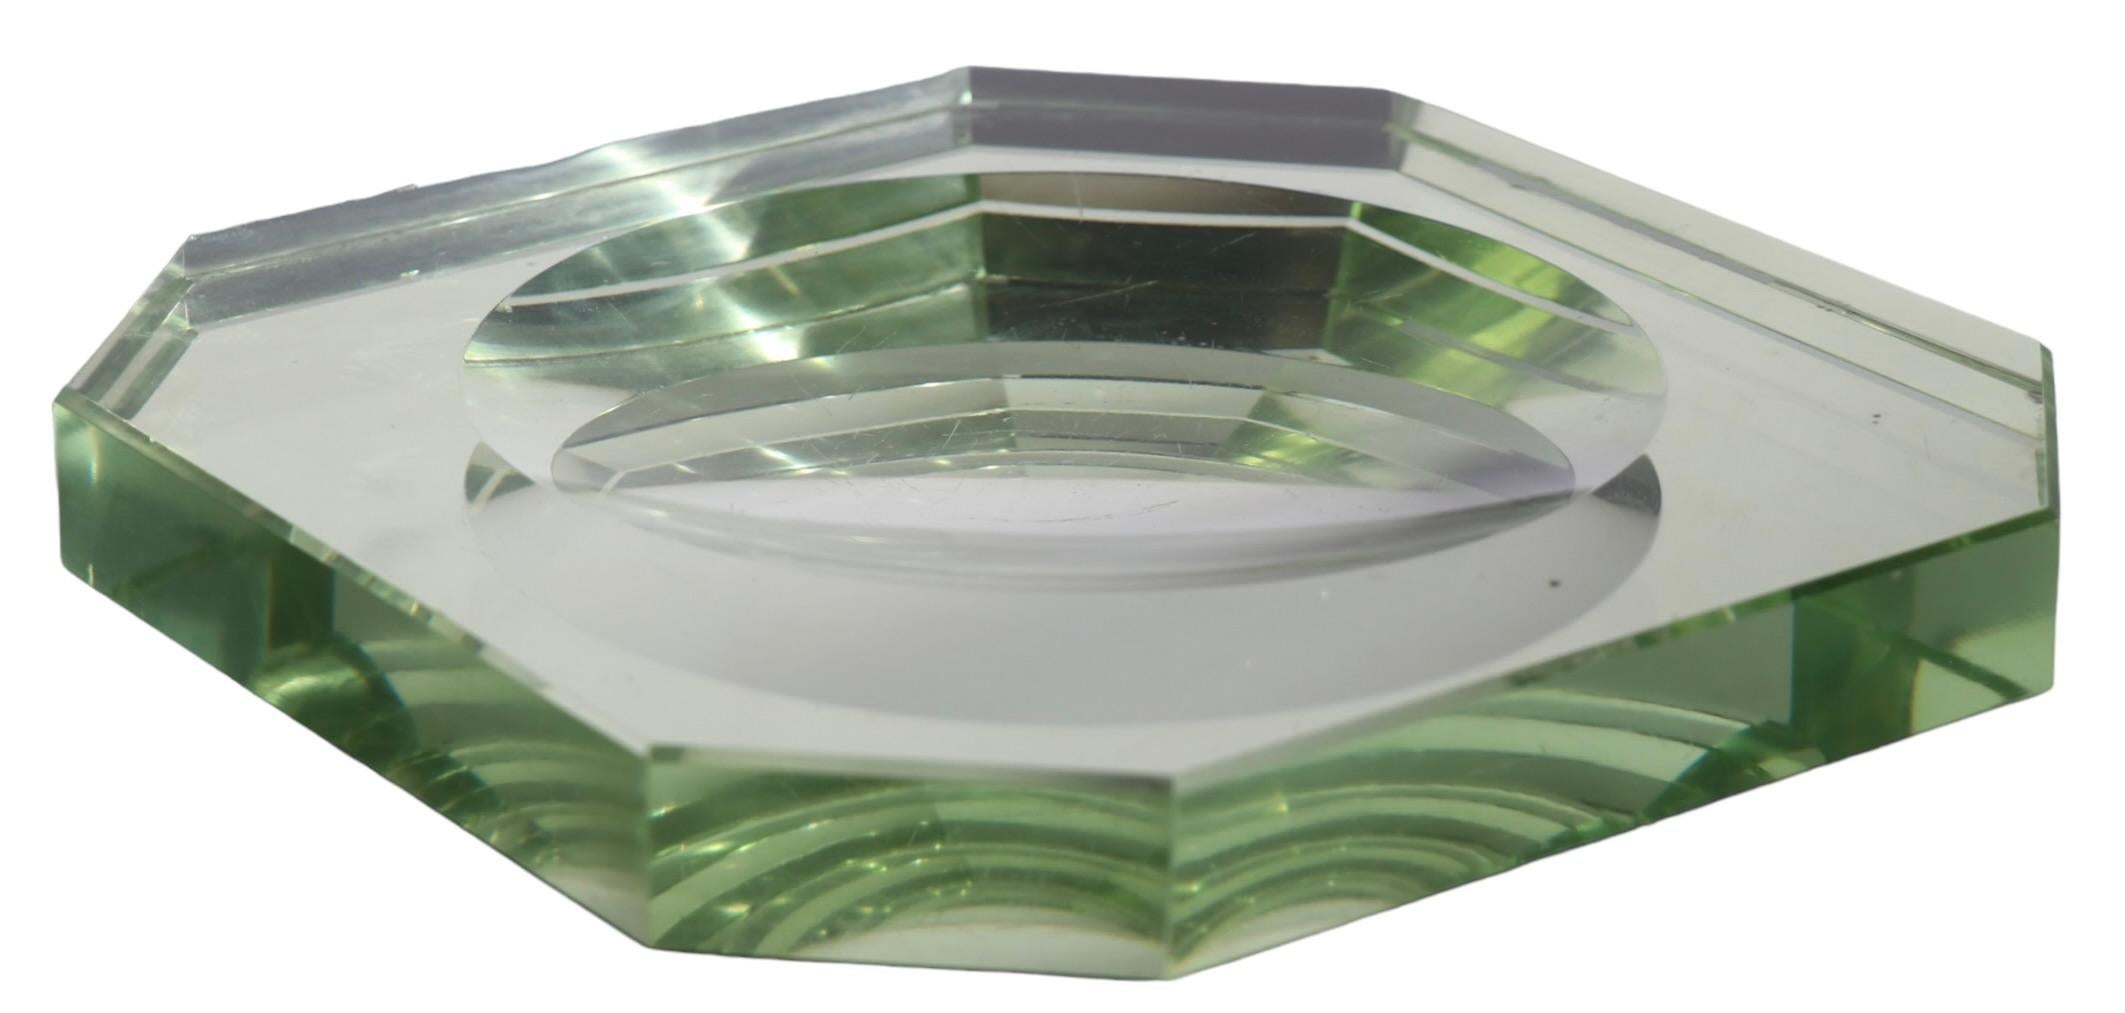 French Art Deco Mirrored Glass Vide Poche  Bowl att. to Jean Luce c 1920's For Sale 4